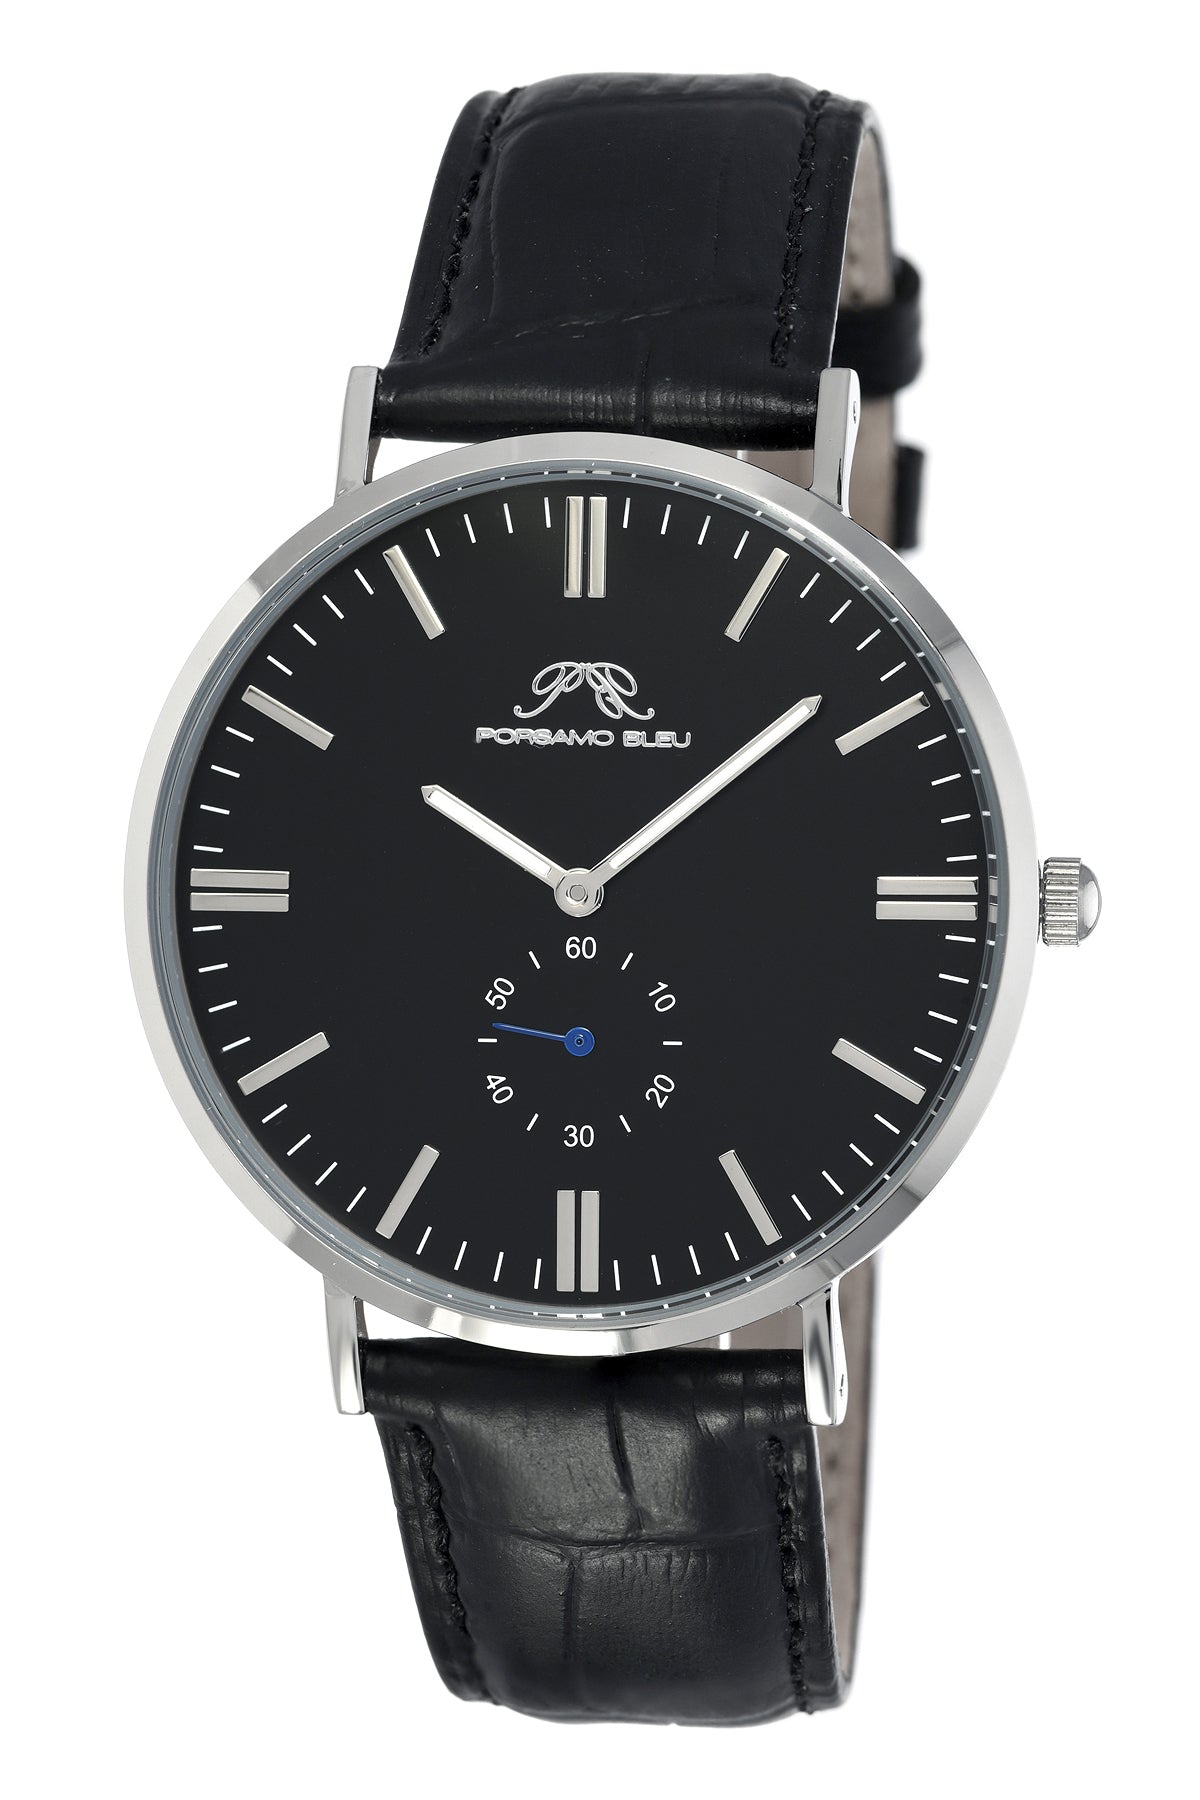 Porsamo Bleu Henry Luxury Men's Genuine Leather Band Watch, Black, Silver 842CHEL